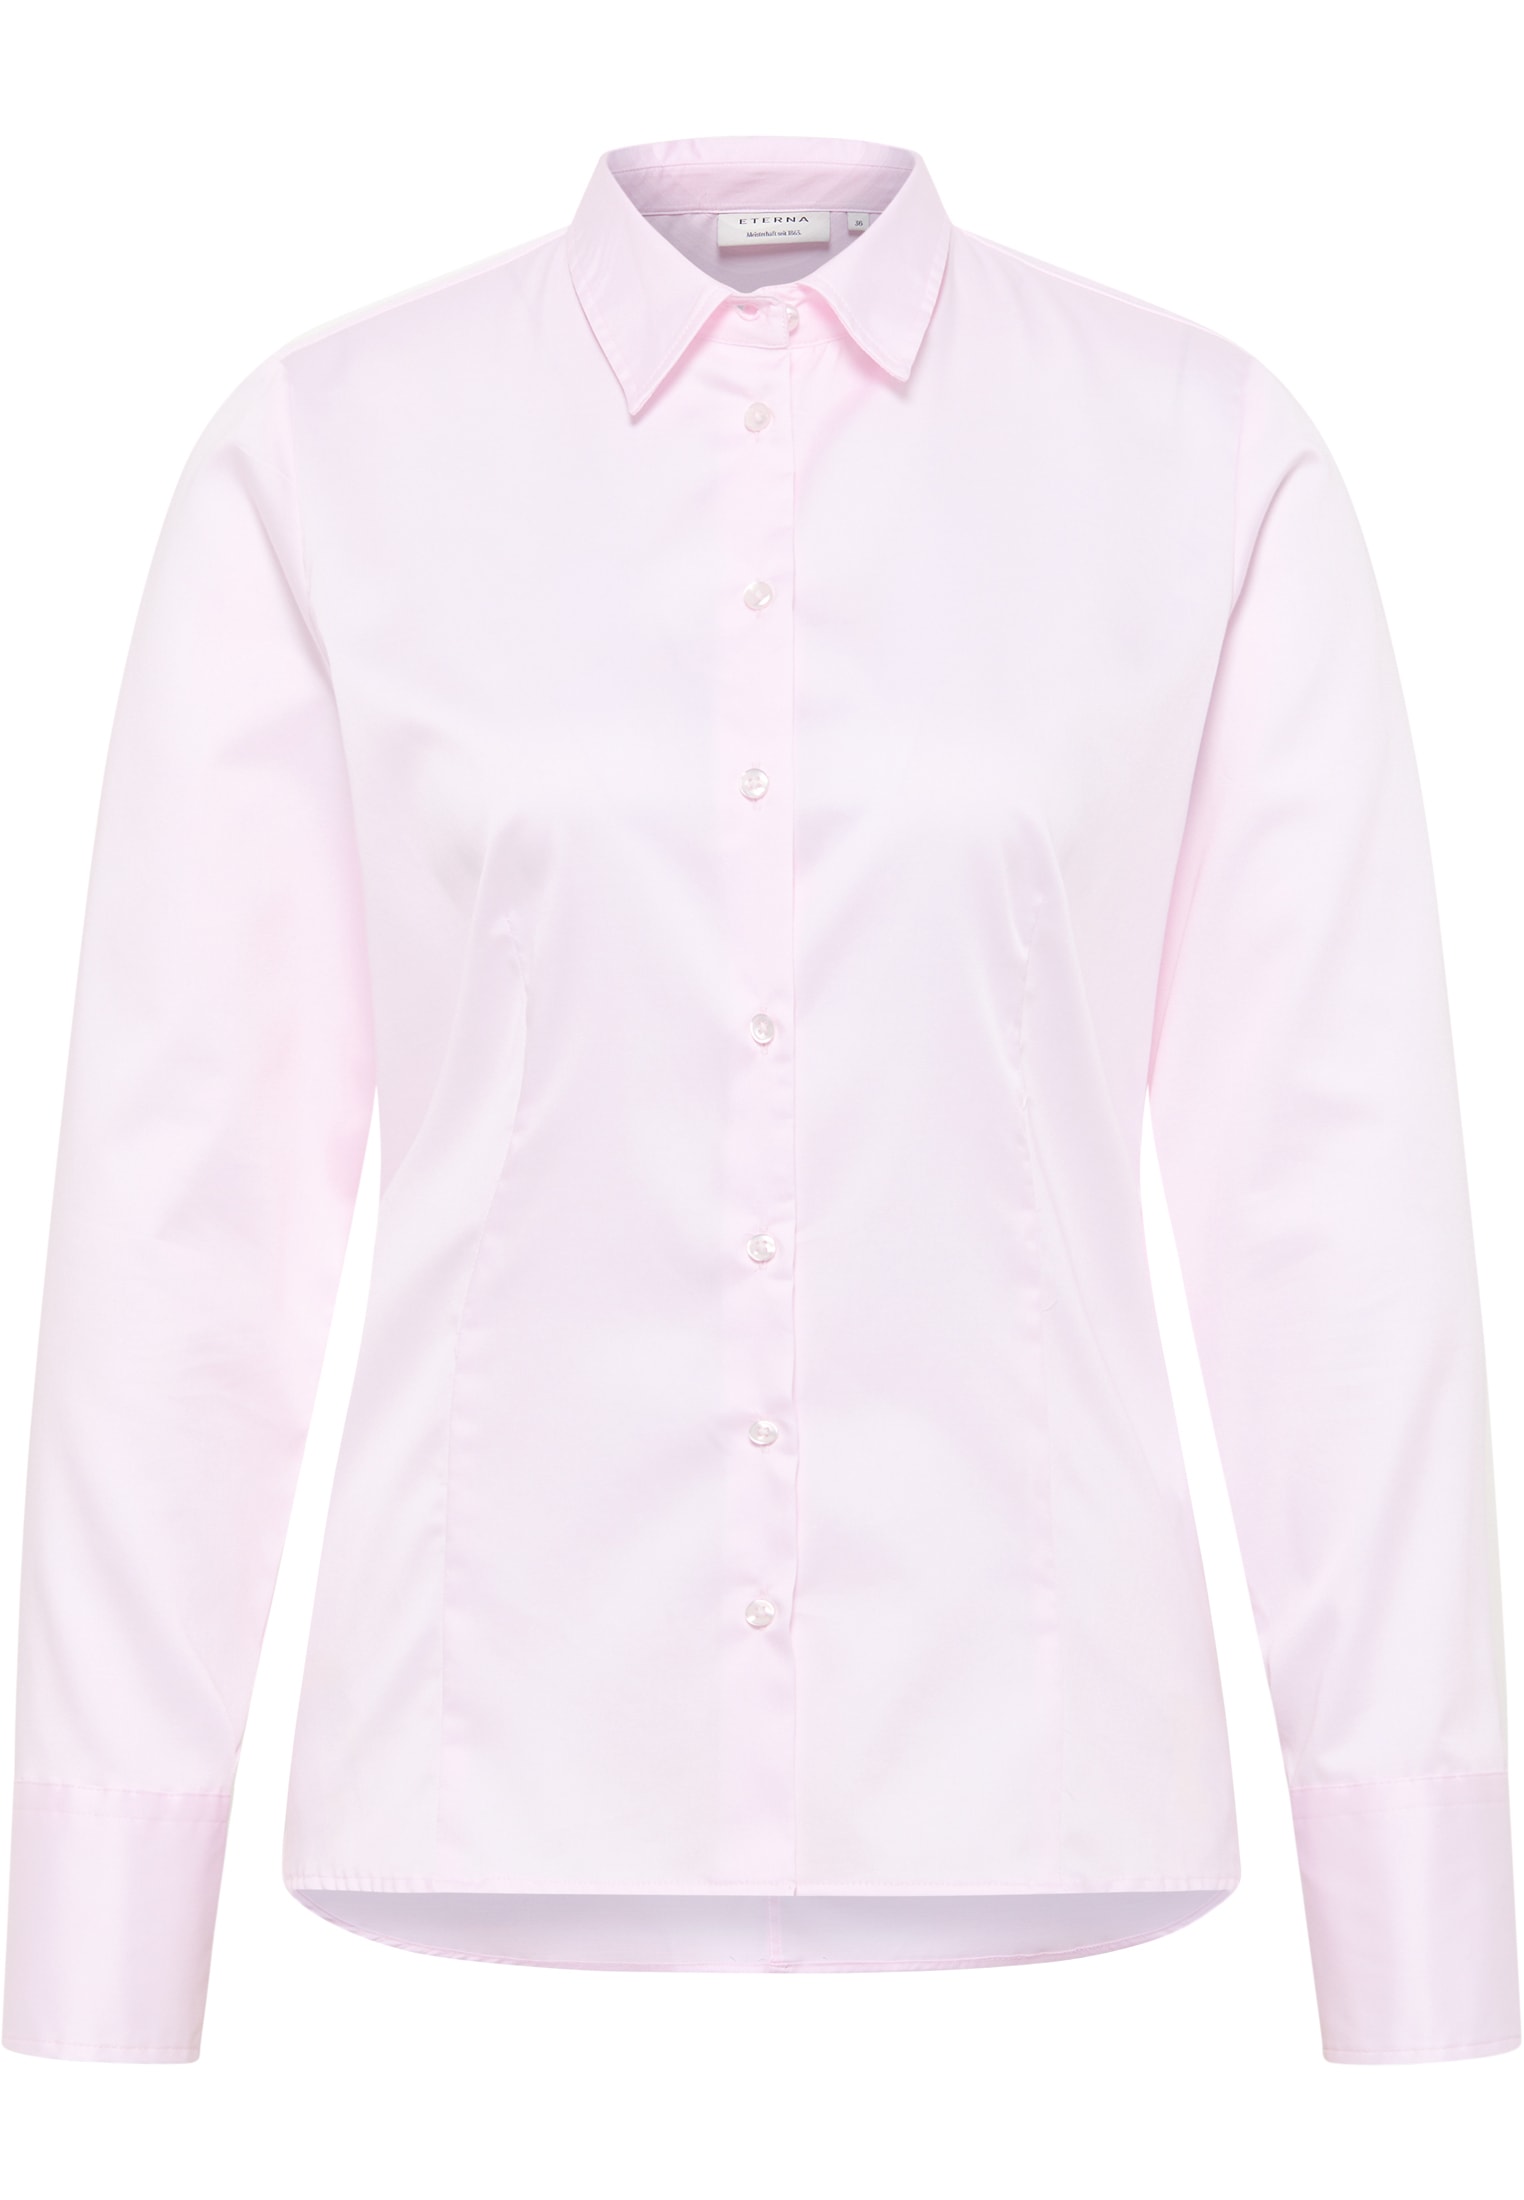 Satin Shirt Bluse in rosa unifarben | rosa | 44 | Langarm |  2BL00399-15-11-44-1/1